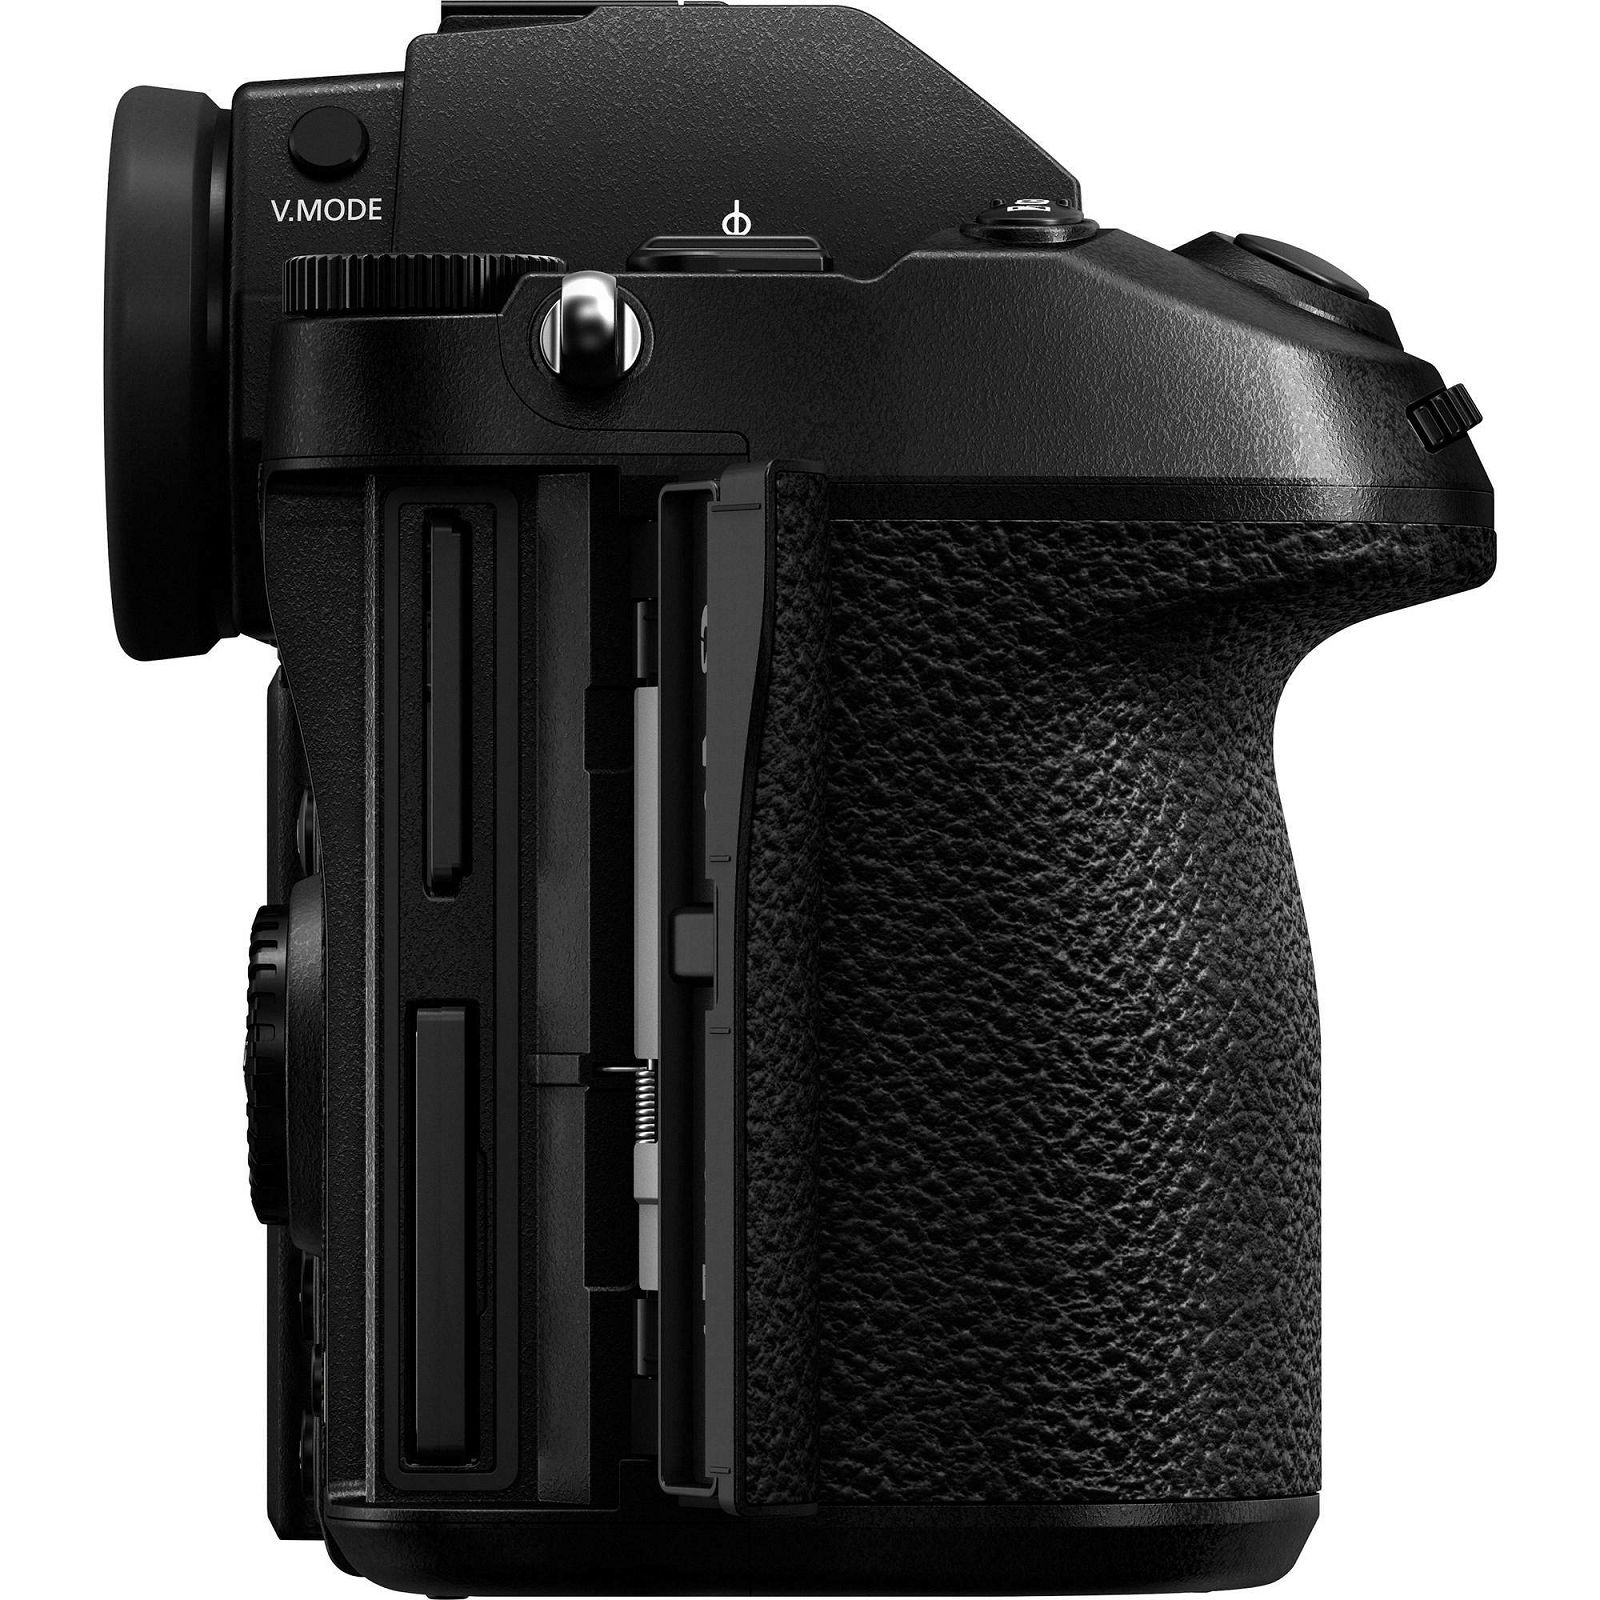 Panasonic Lumix S1 Body 4K Mirrorless bezrcalni digitalni fotoaparat tijelo DC-S1 Full Frame Digital Camera (DC-S1E-K)